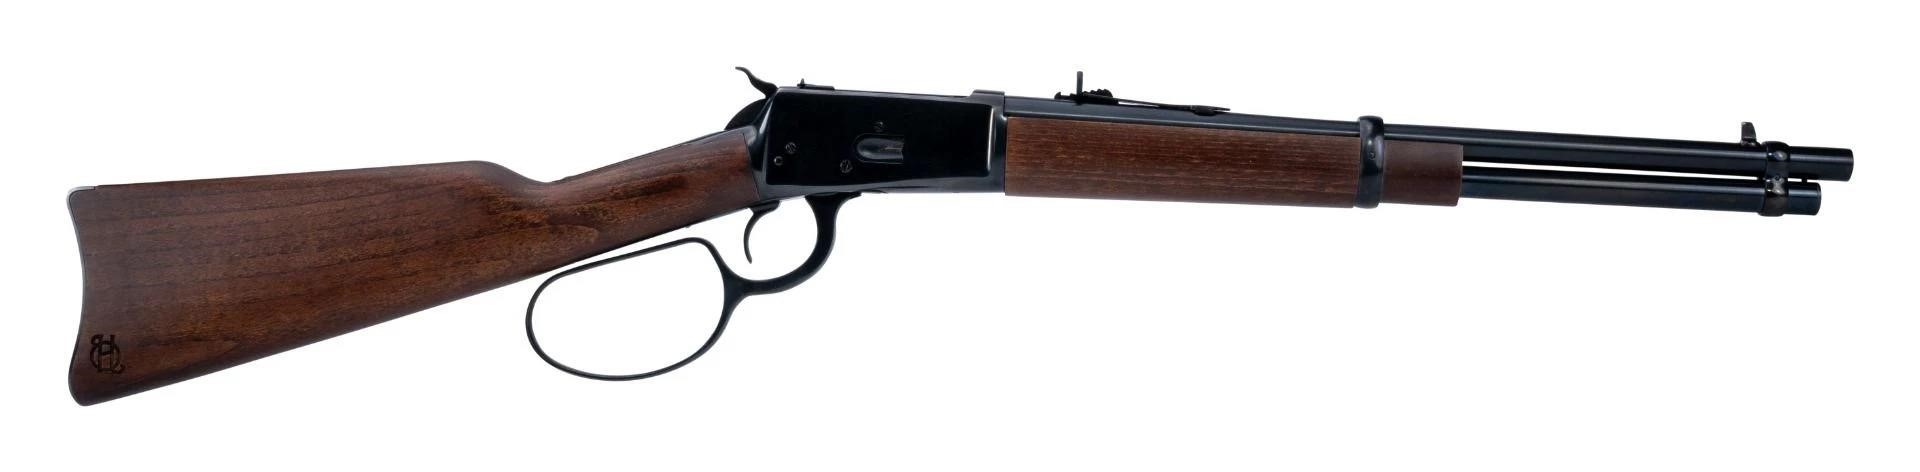 Heritage 92 Lever Action Rifle - .357 Magnum | Bla